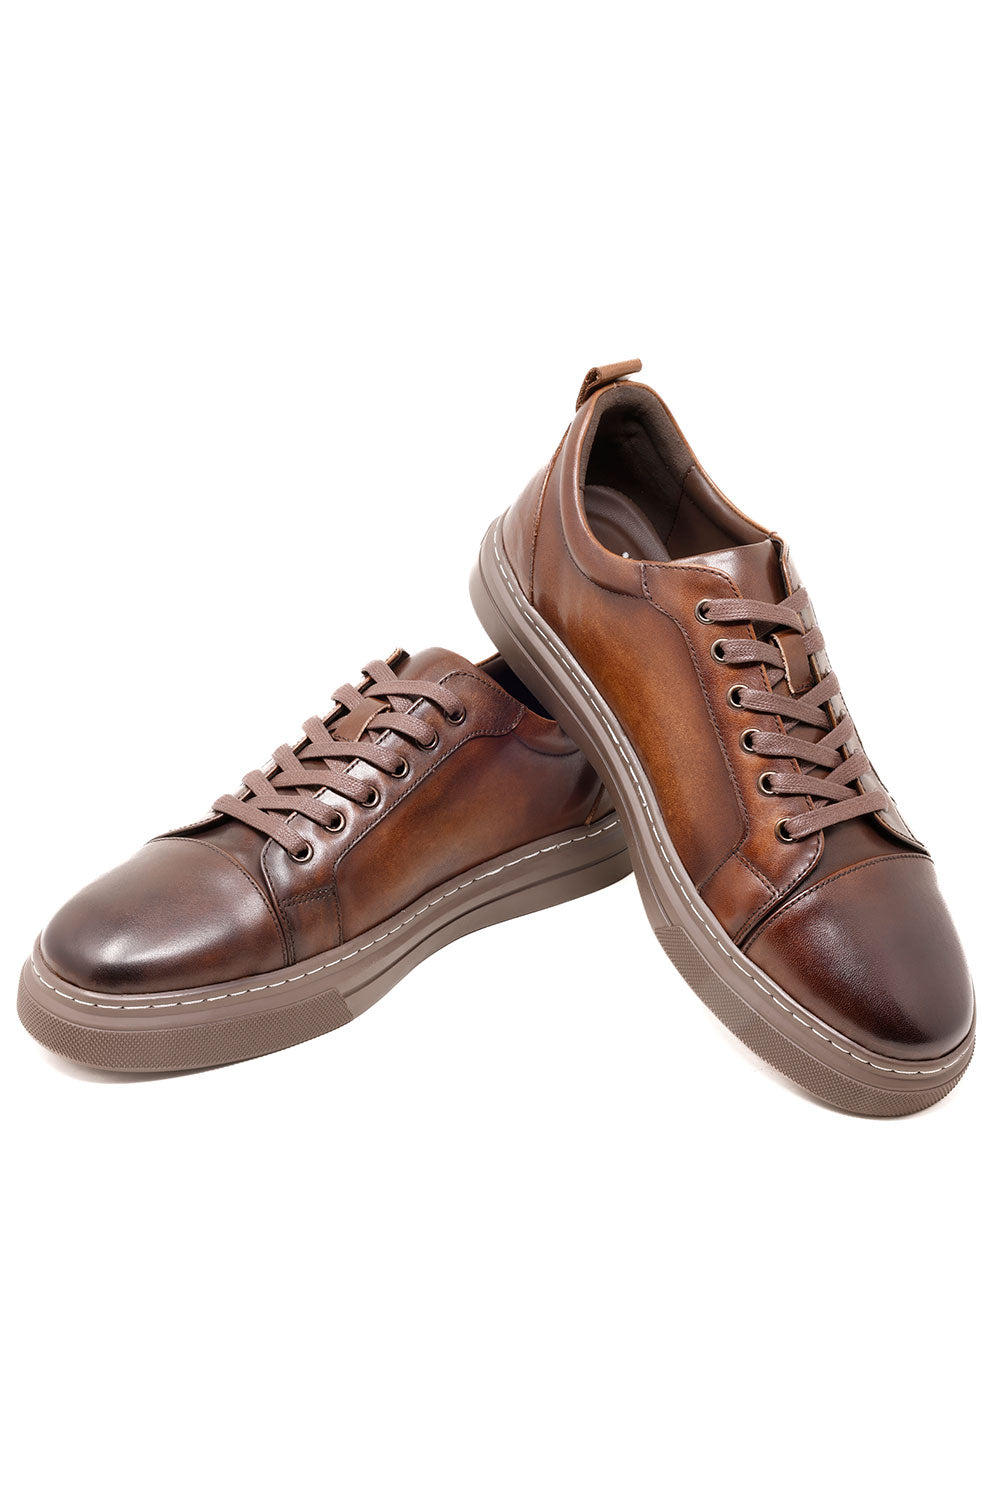 Barabas Men's Premium Leather Low Top Casual Sneaker 3SH21 Coffee